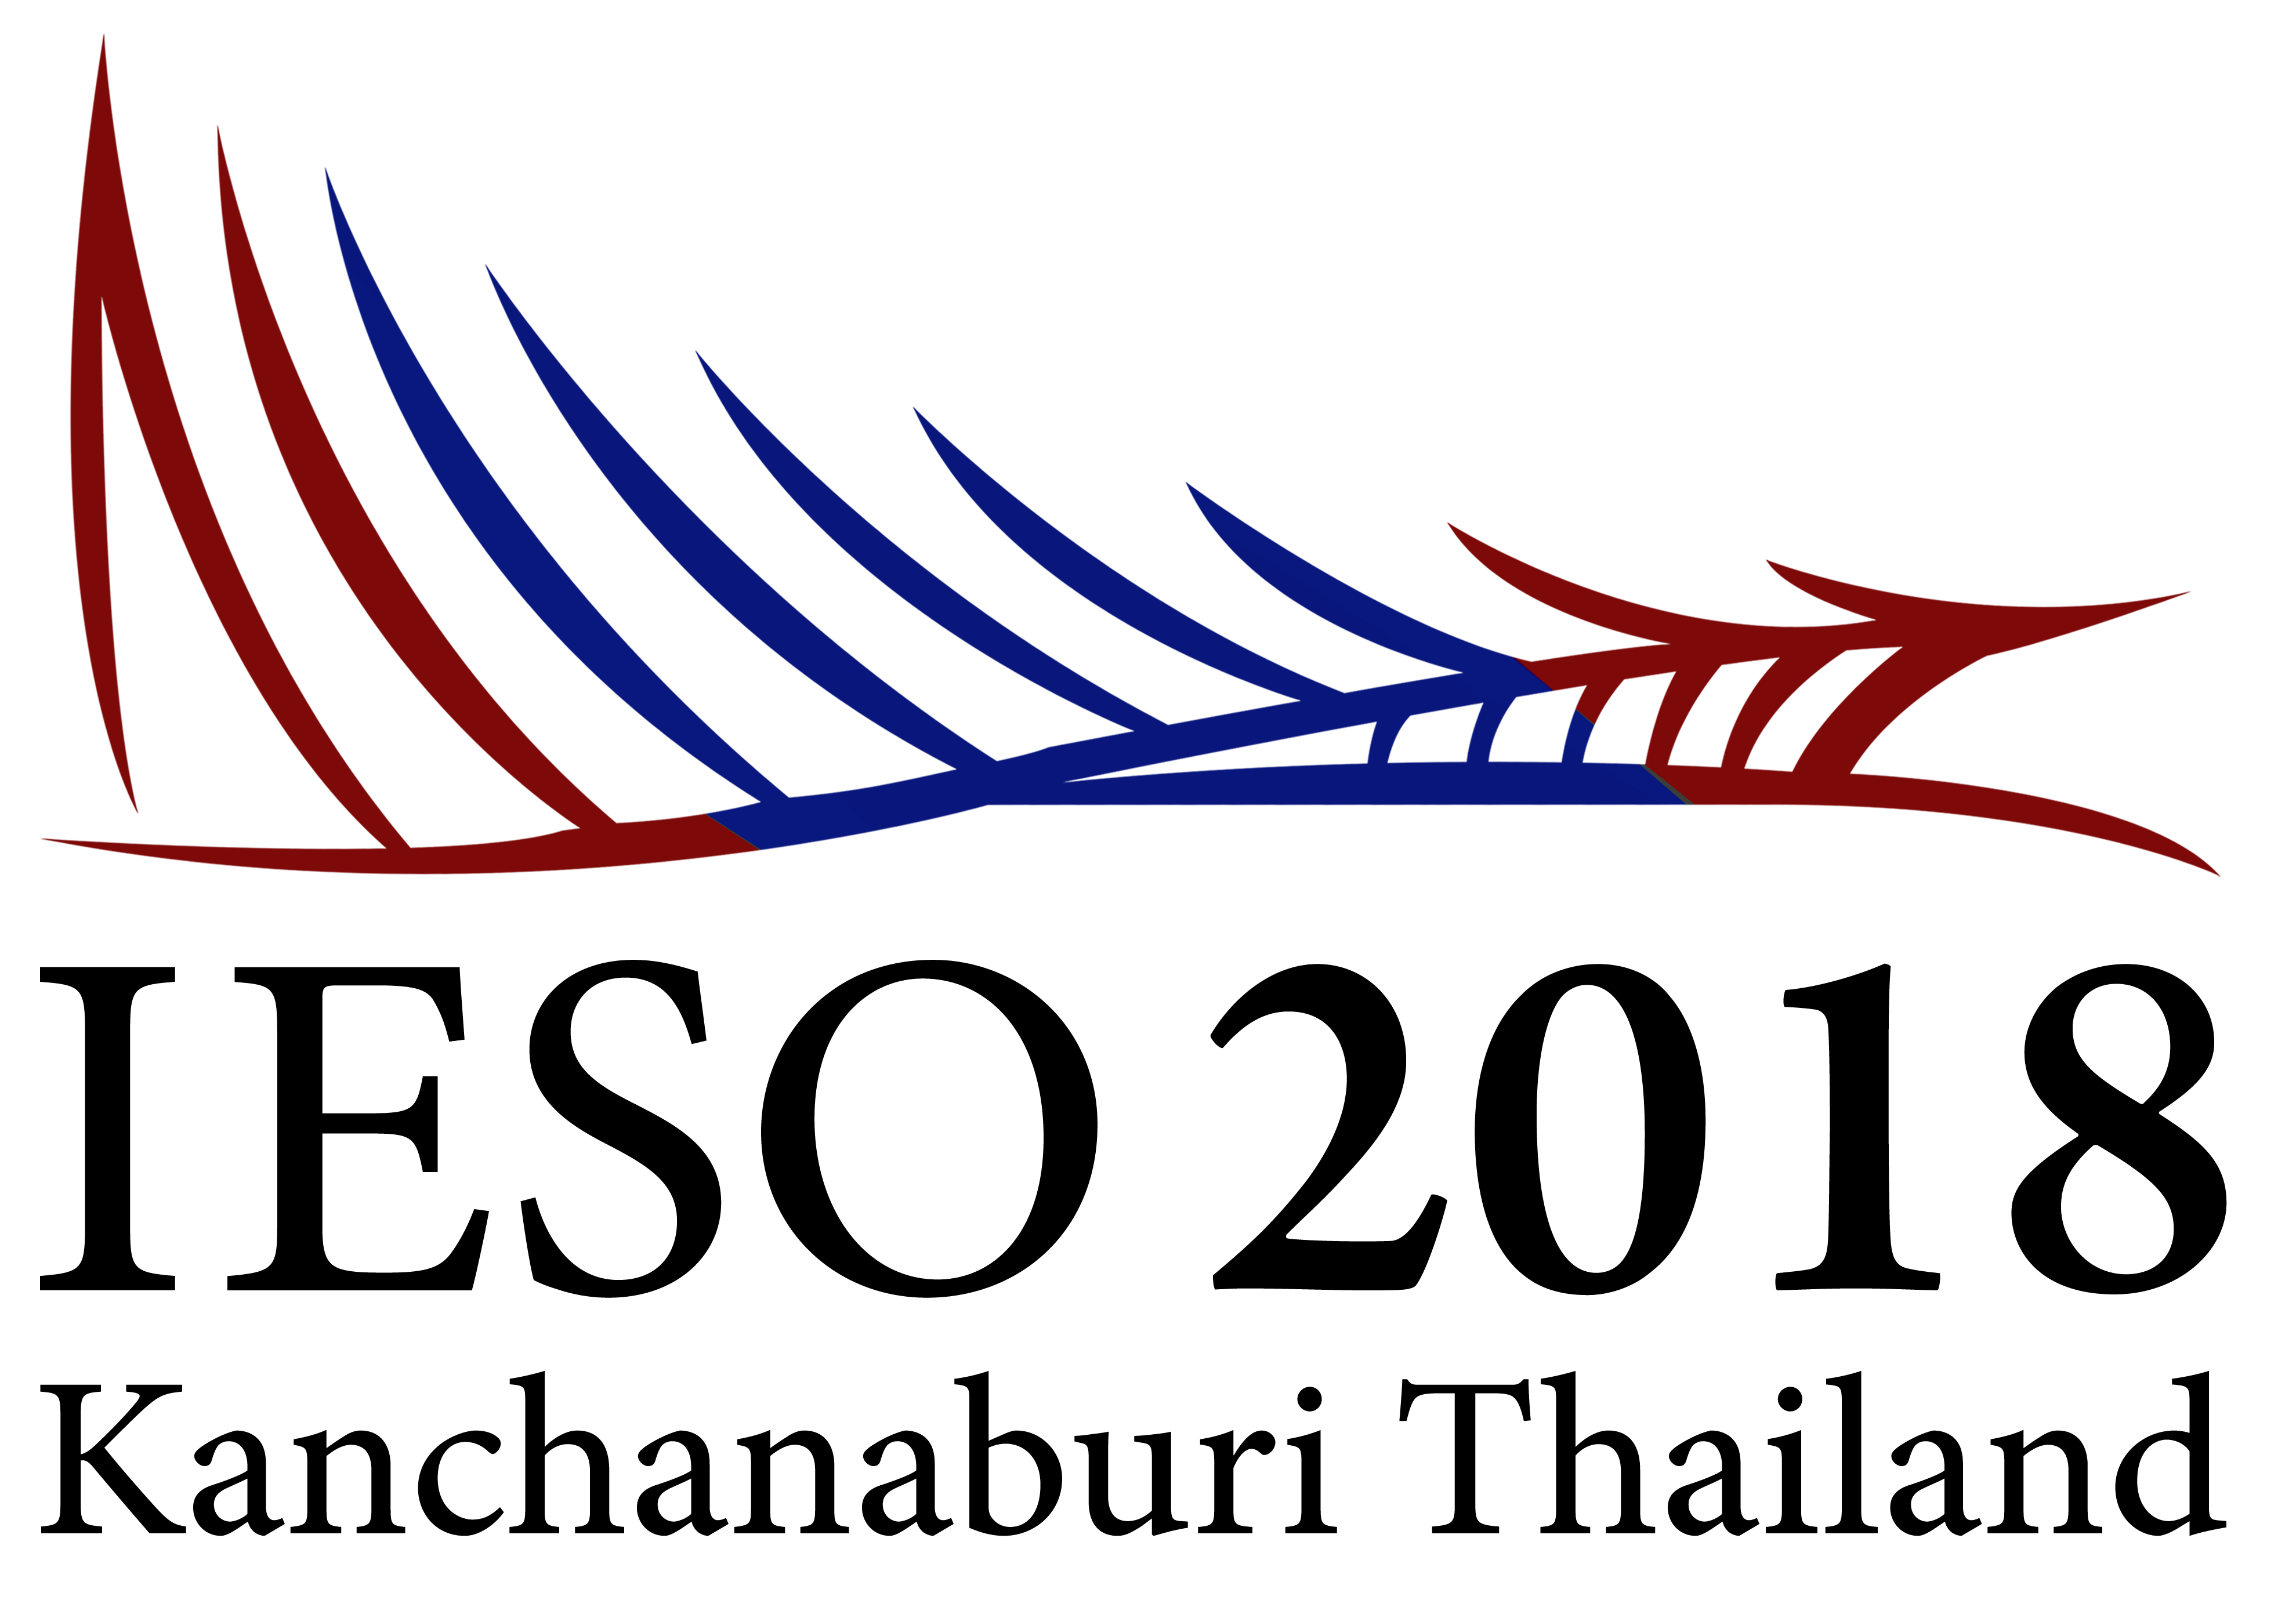 Earth Science Logo - IESO-info | International Earth Science Olympiad